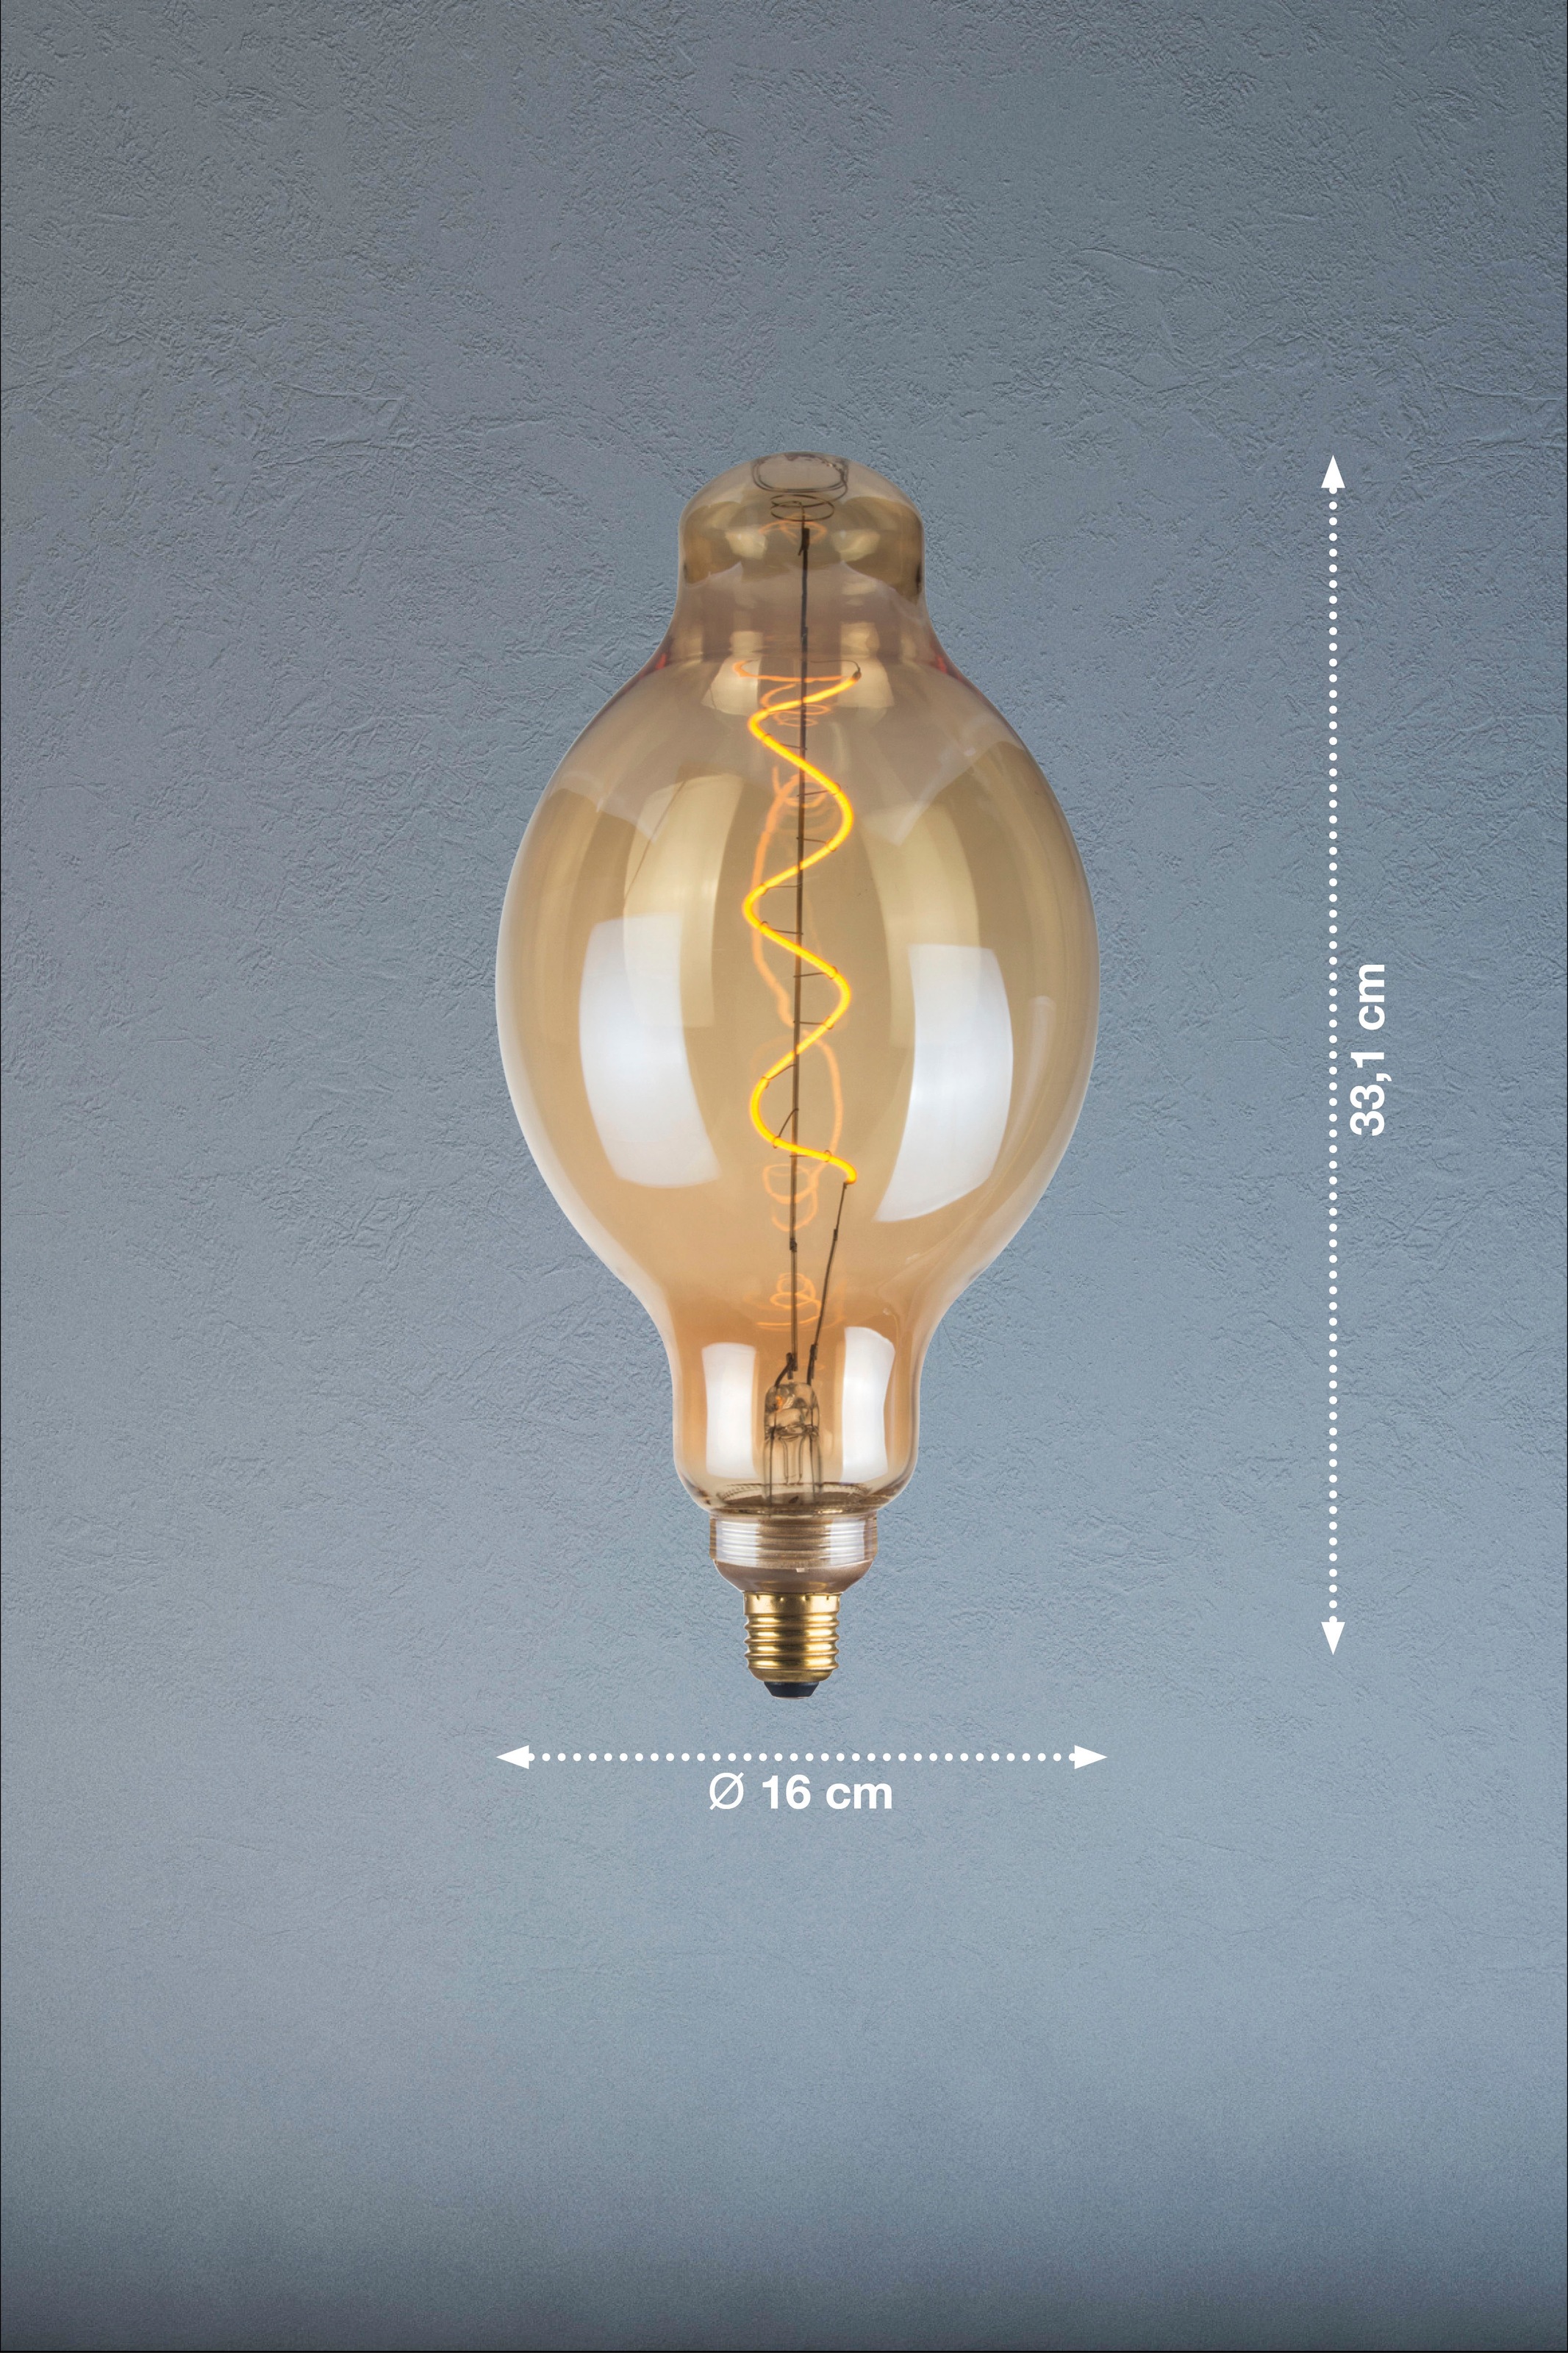 easy! BY FHL LED-Leuchtmittel, E27, 1 St., Lampe, Leuchtmittel, bernsteinfarbenes Design,E27-Fassung,warmes Licht